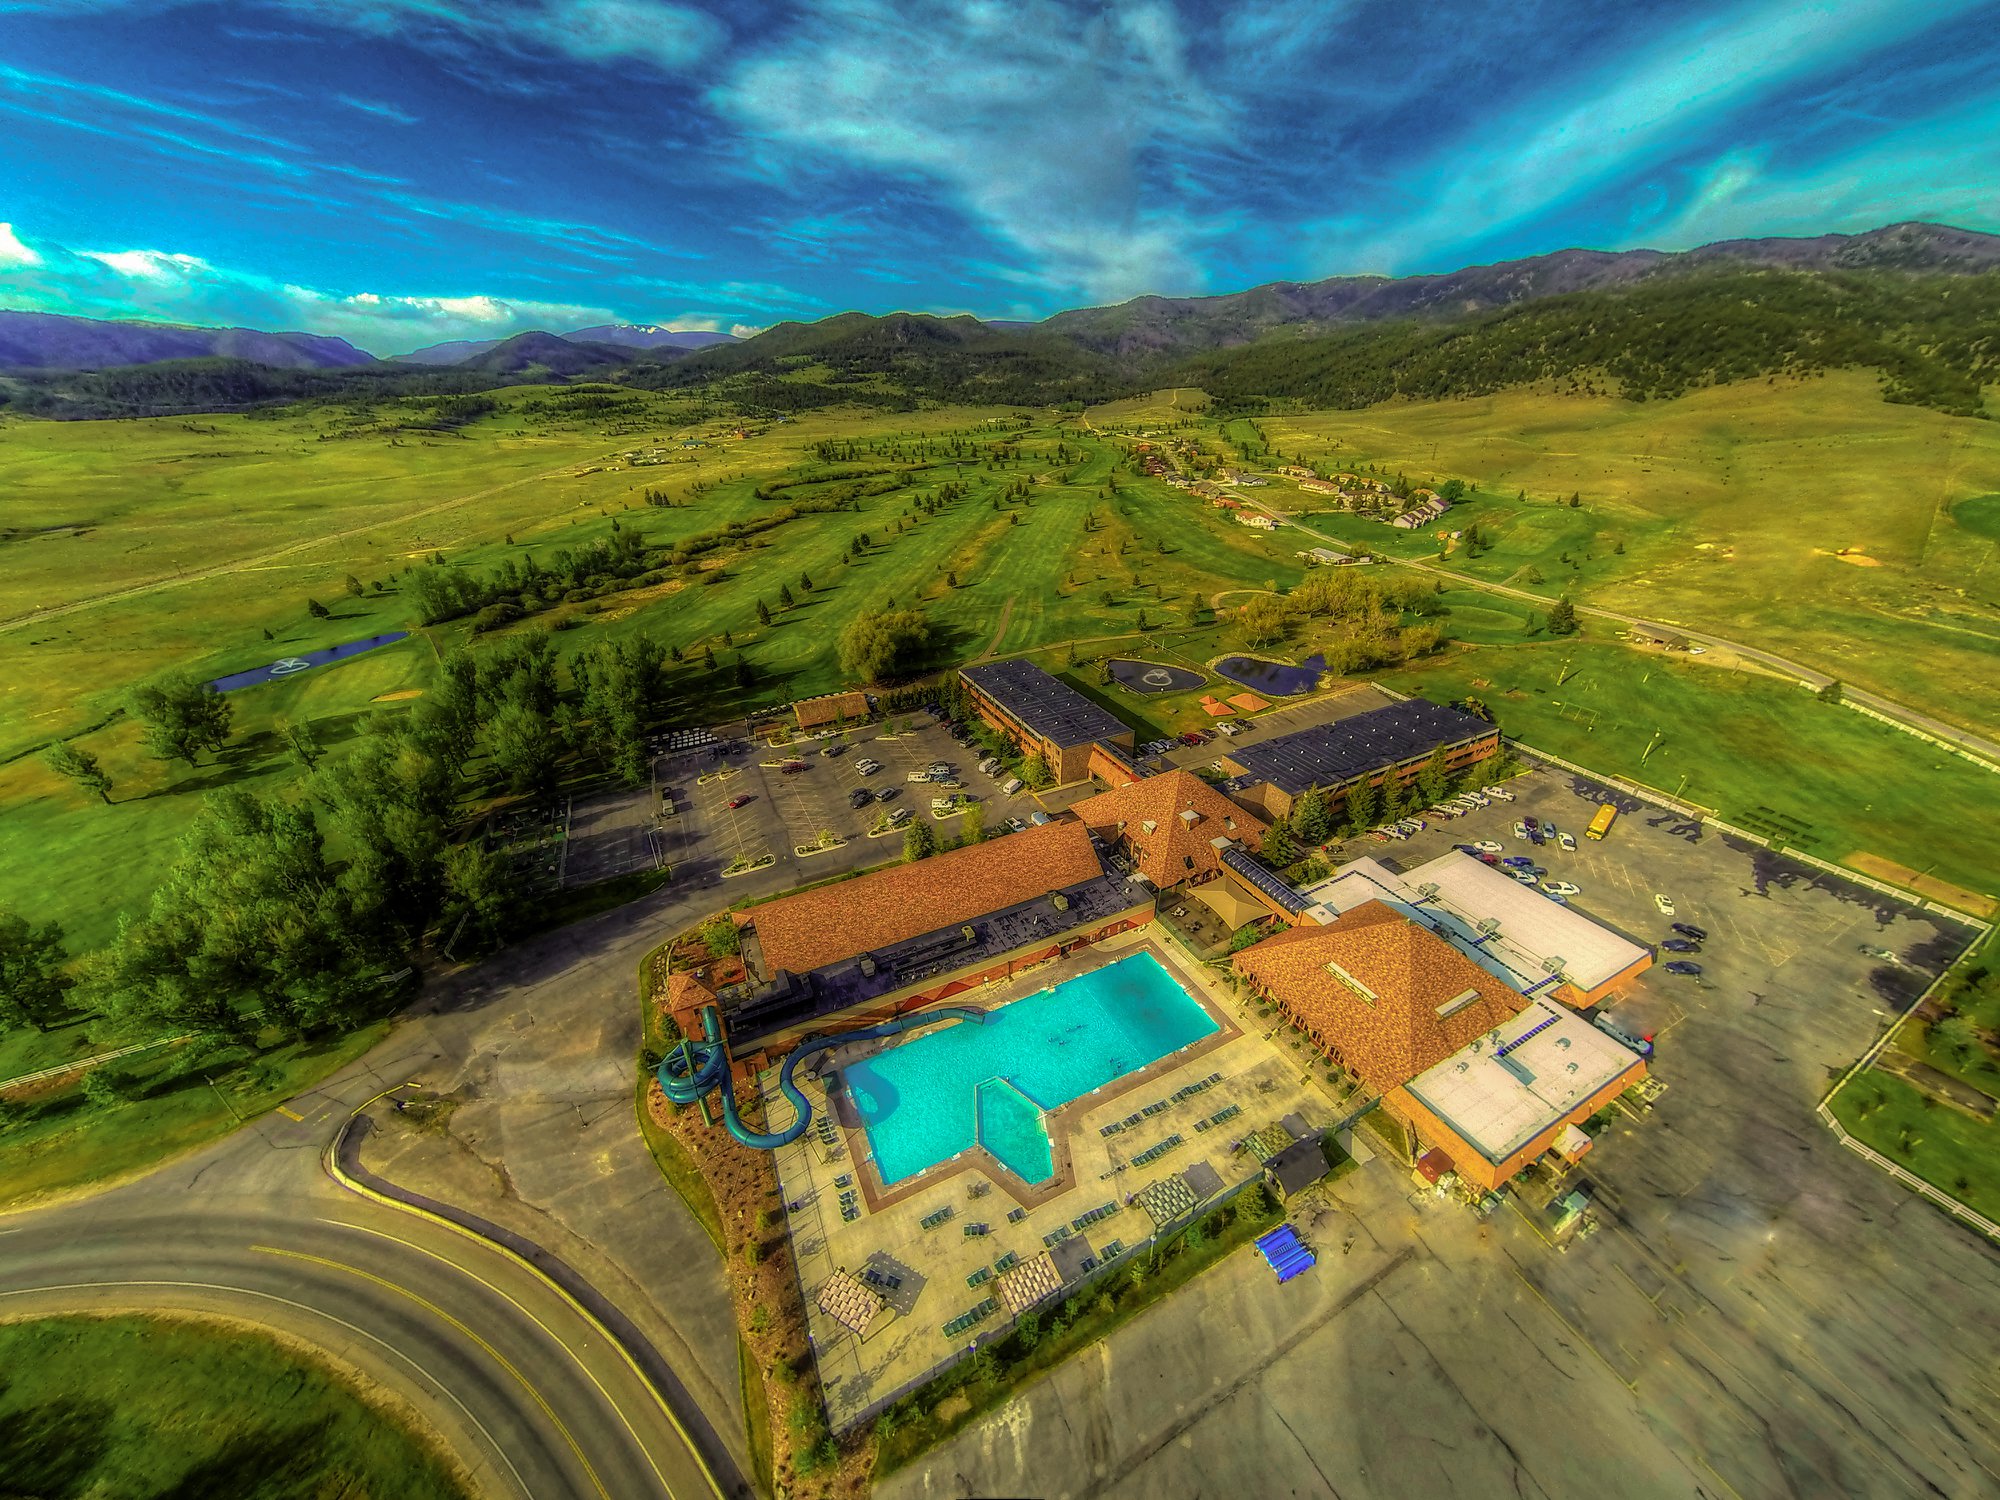 Fairmont Hot Springs - Montana